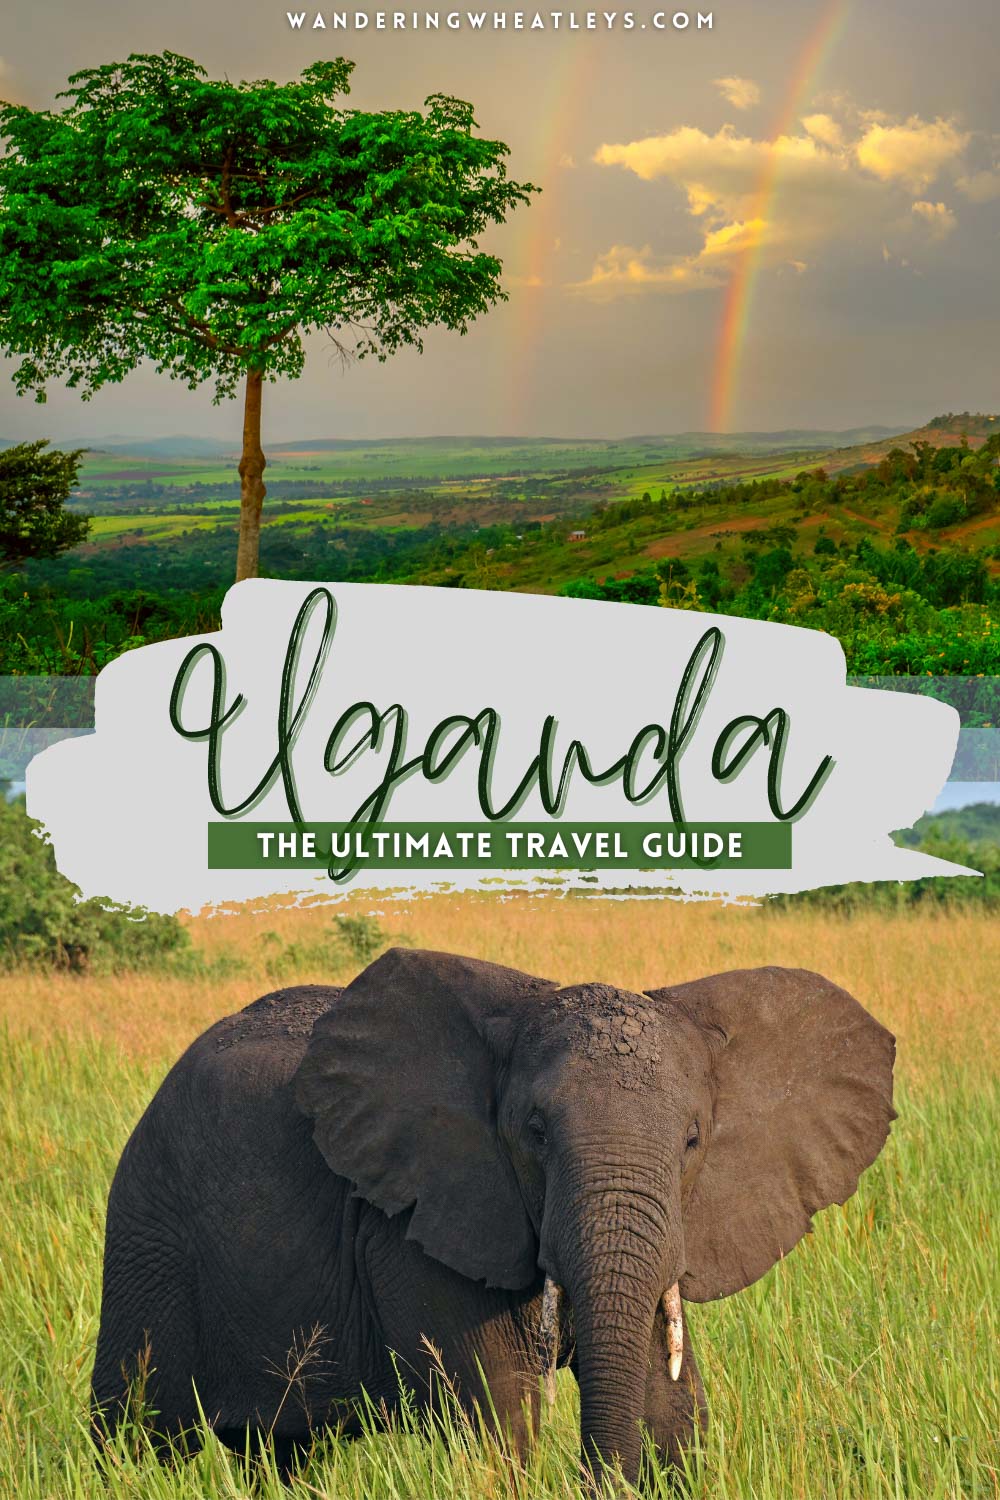 travel guide to uganda